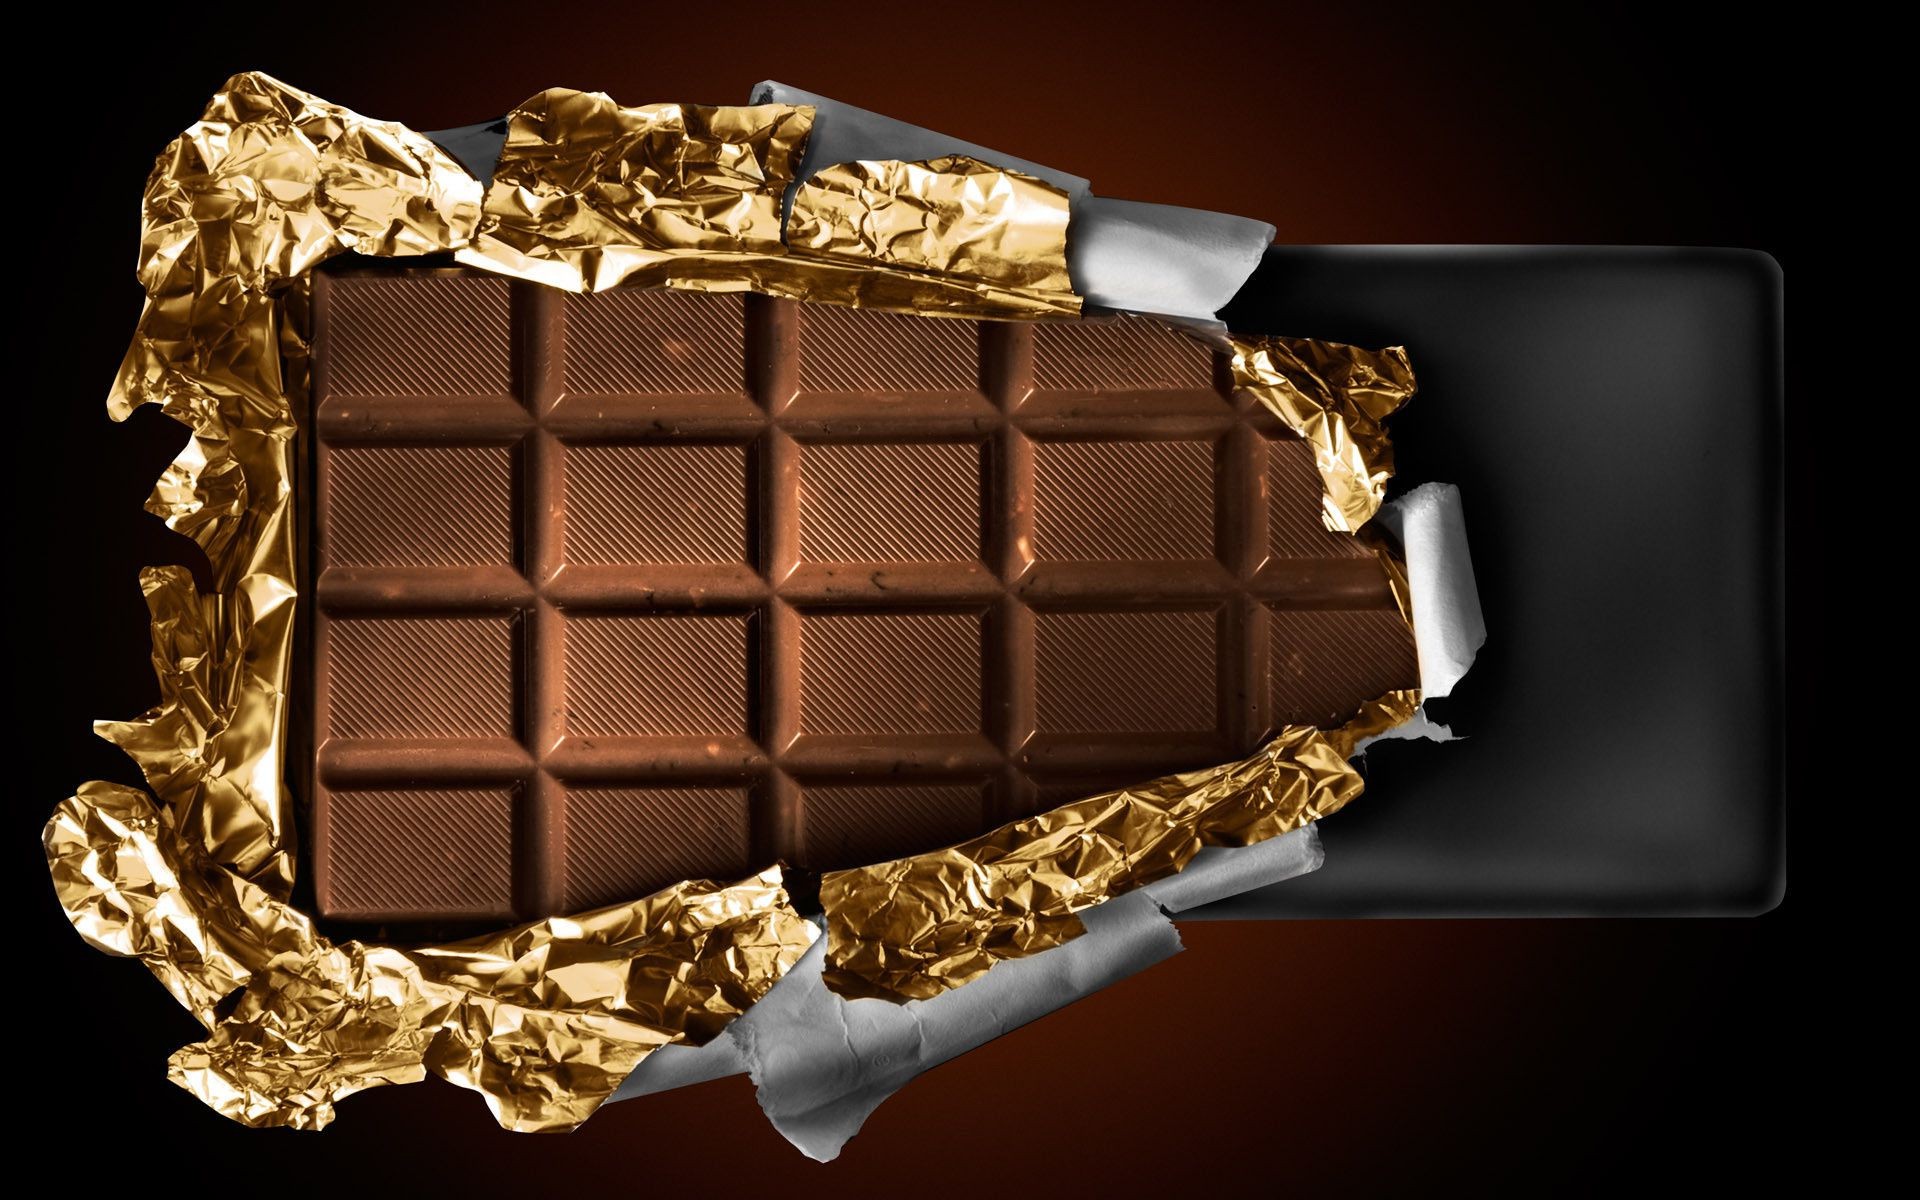 contrasts chocolate luxury dark gold candy desktop sweet food temptation addiction